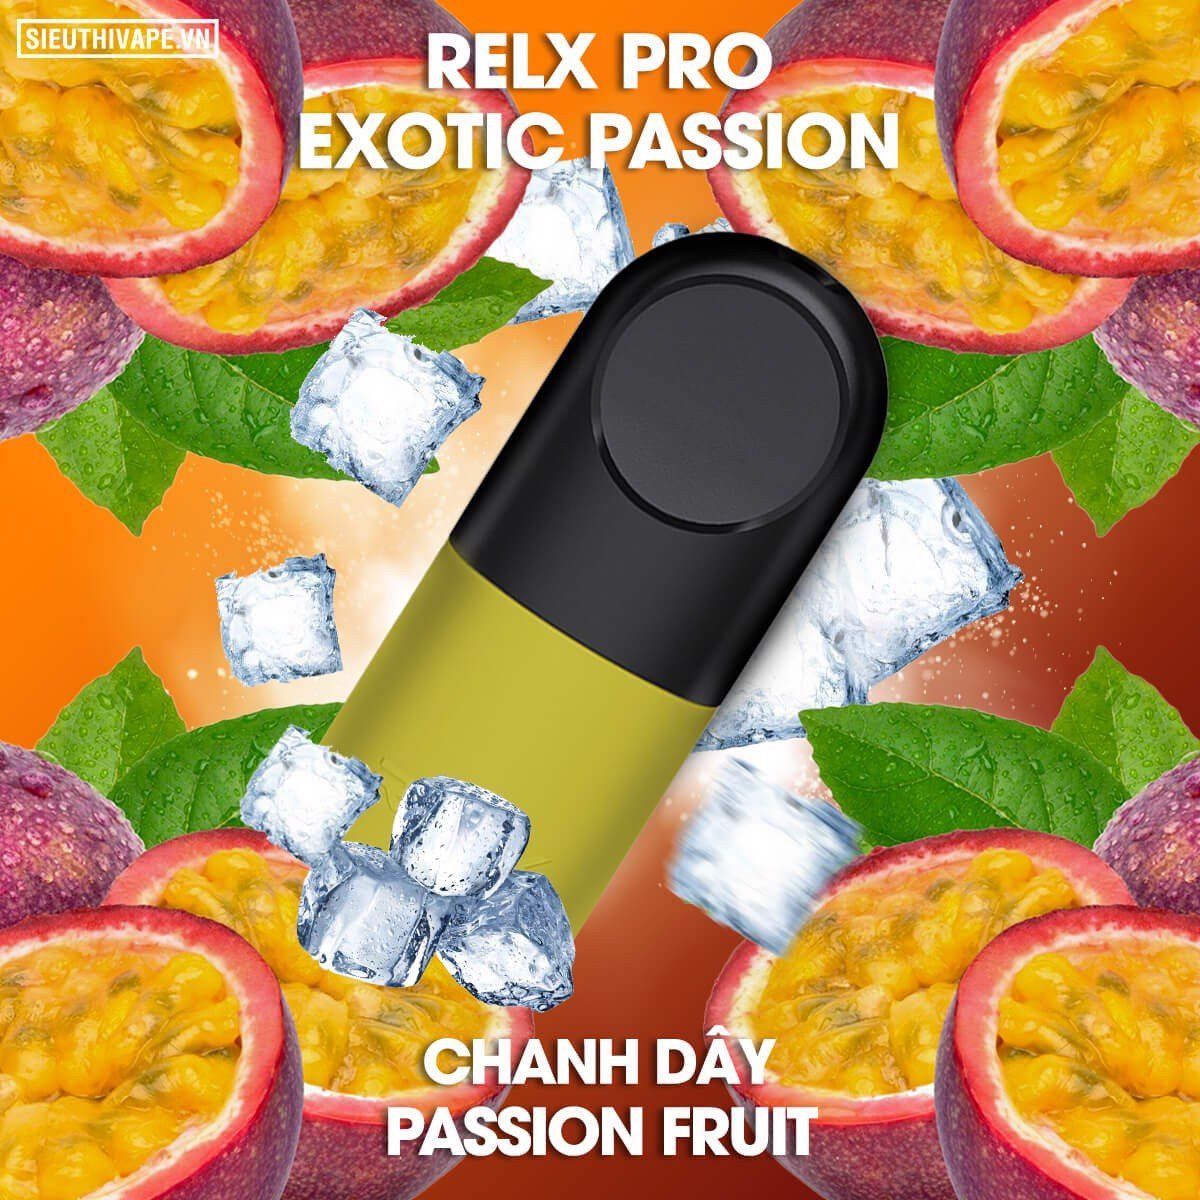  Pod Relx Pro 2 Passion Fruit Cho Relx Pod - Chính Hãng 